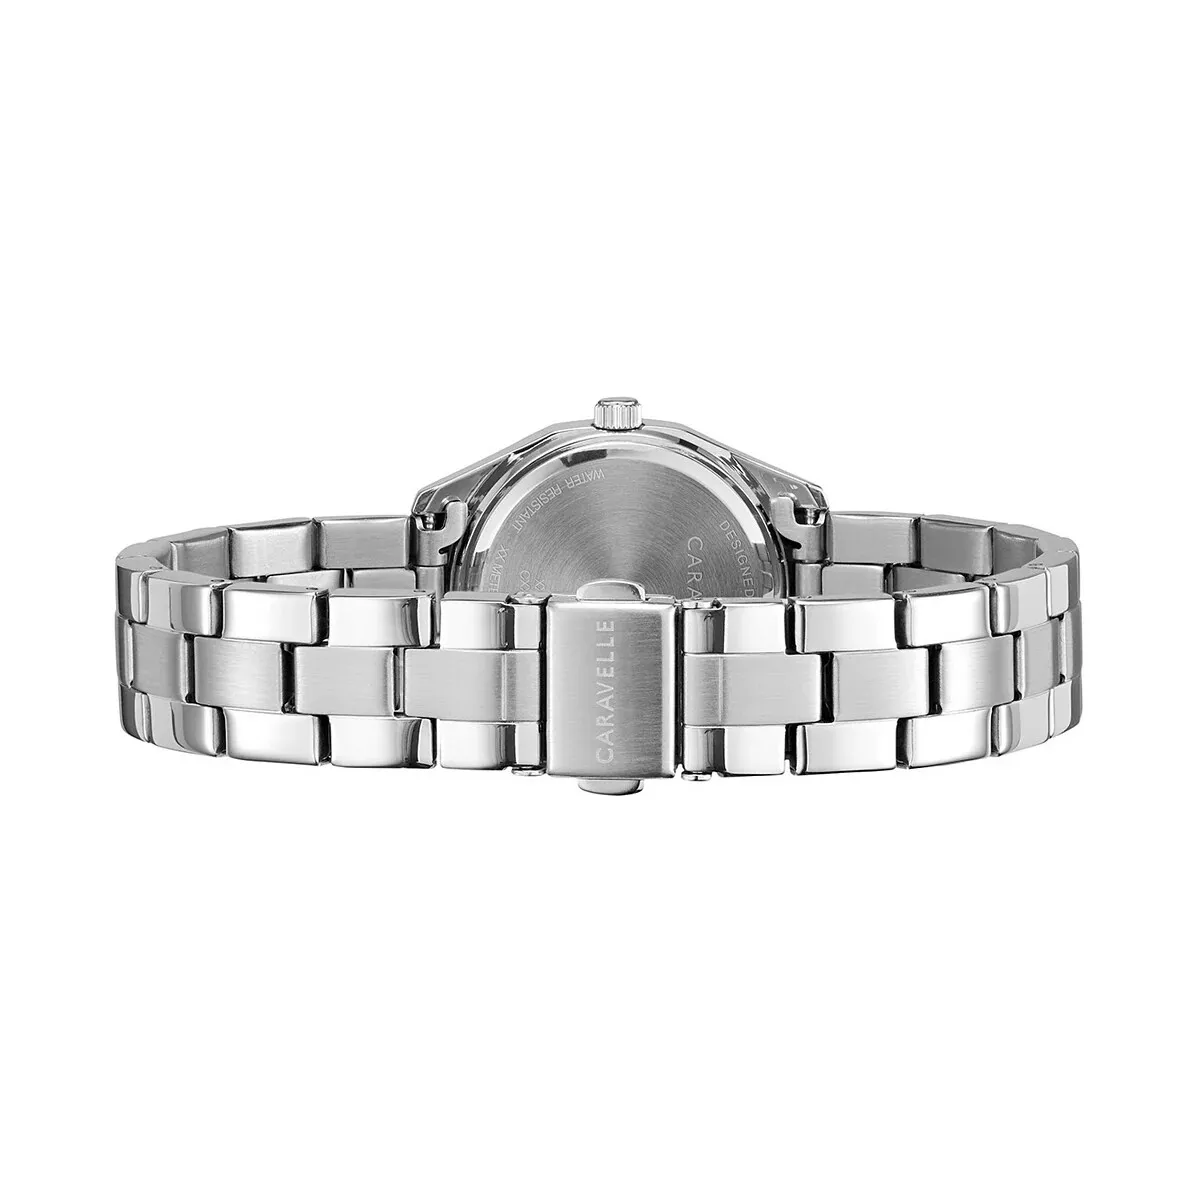 Caravelle By Bulova Women's Quartz Stainless Steel Watch (43M120)